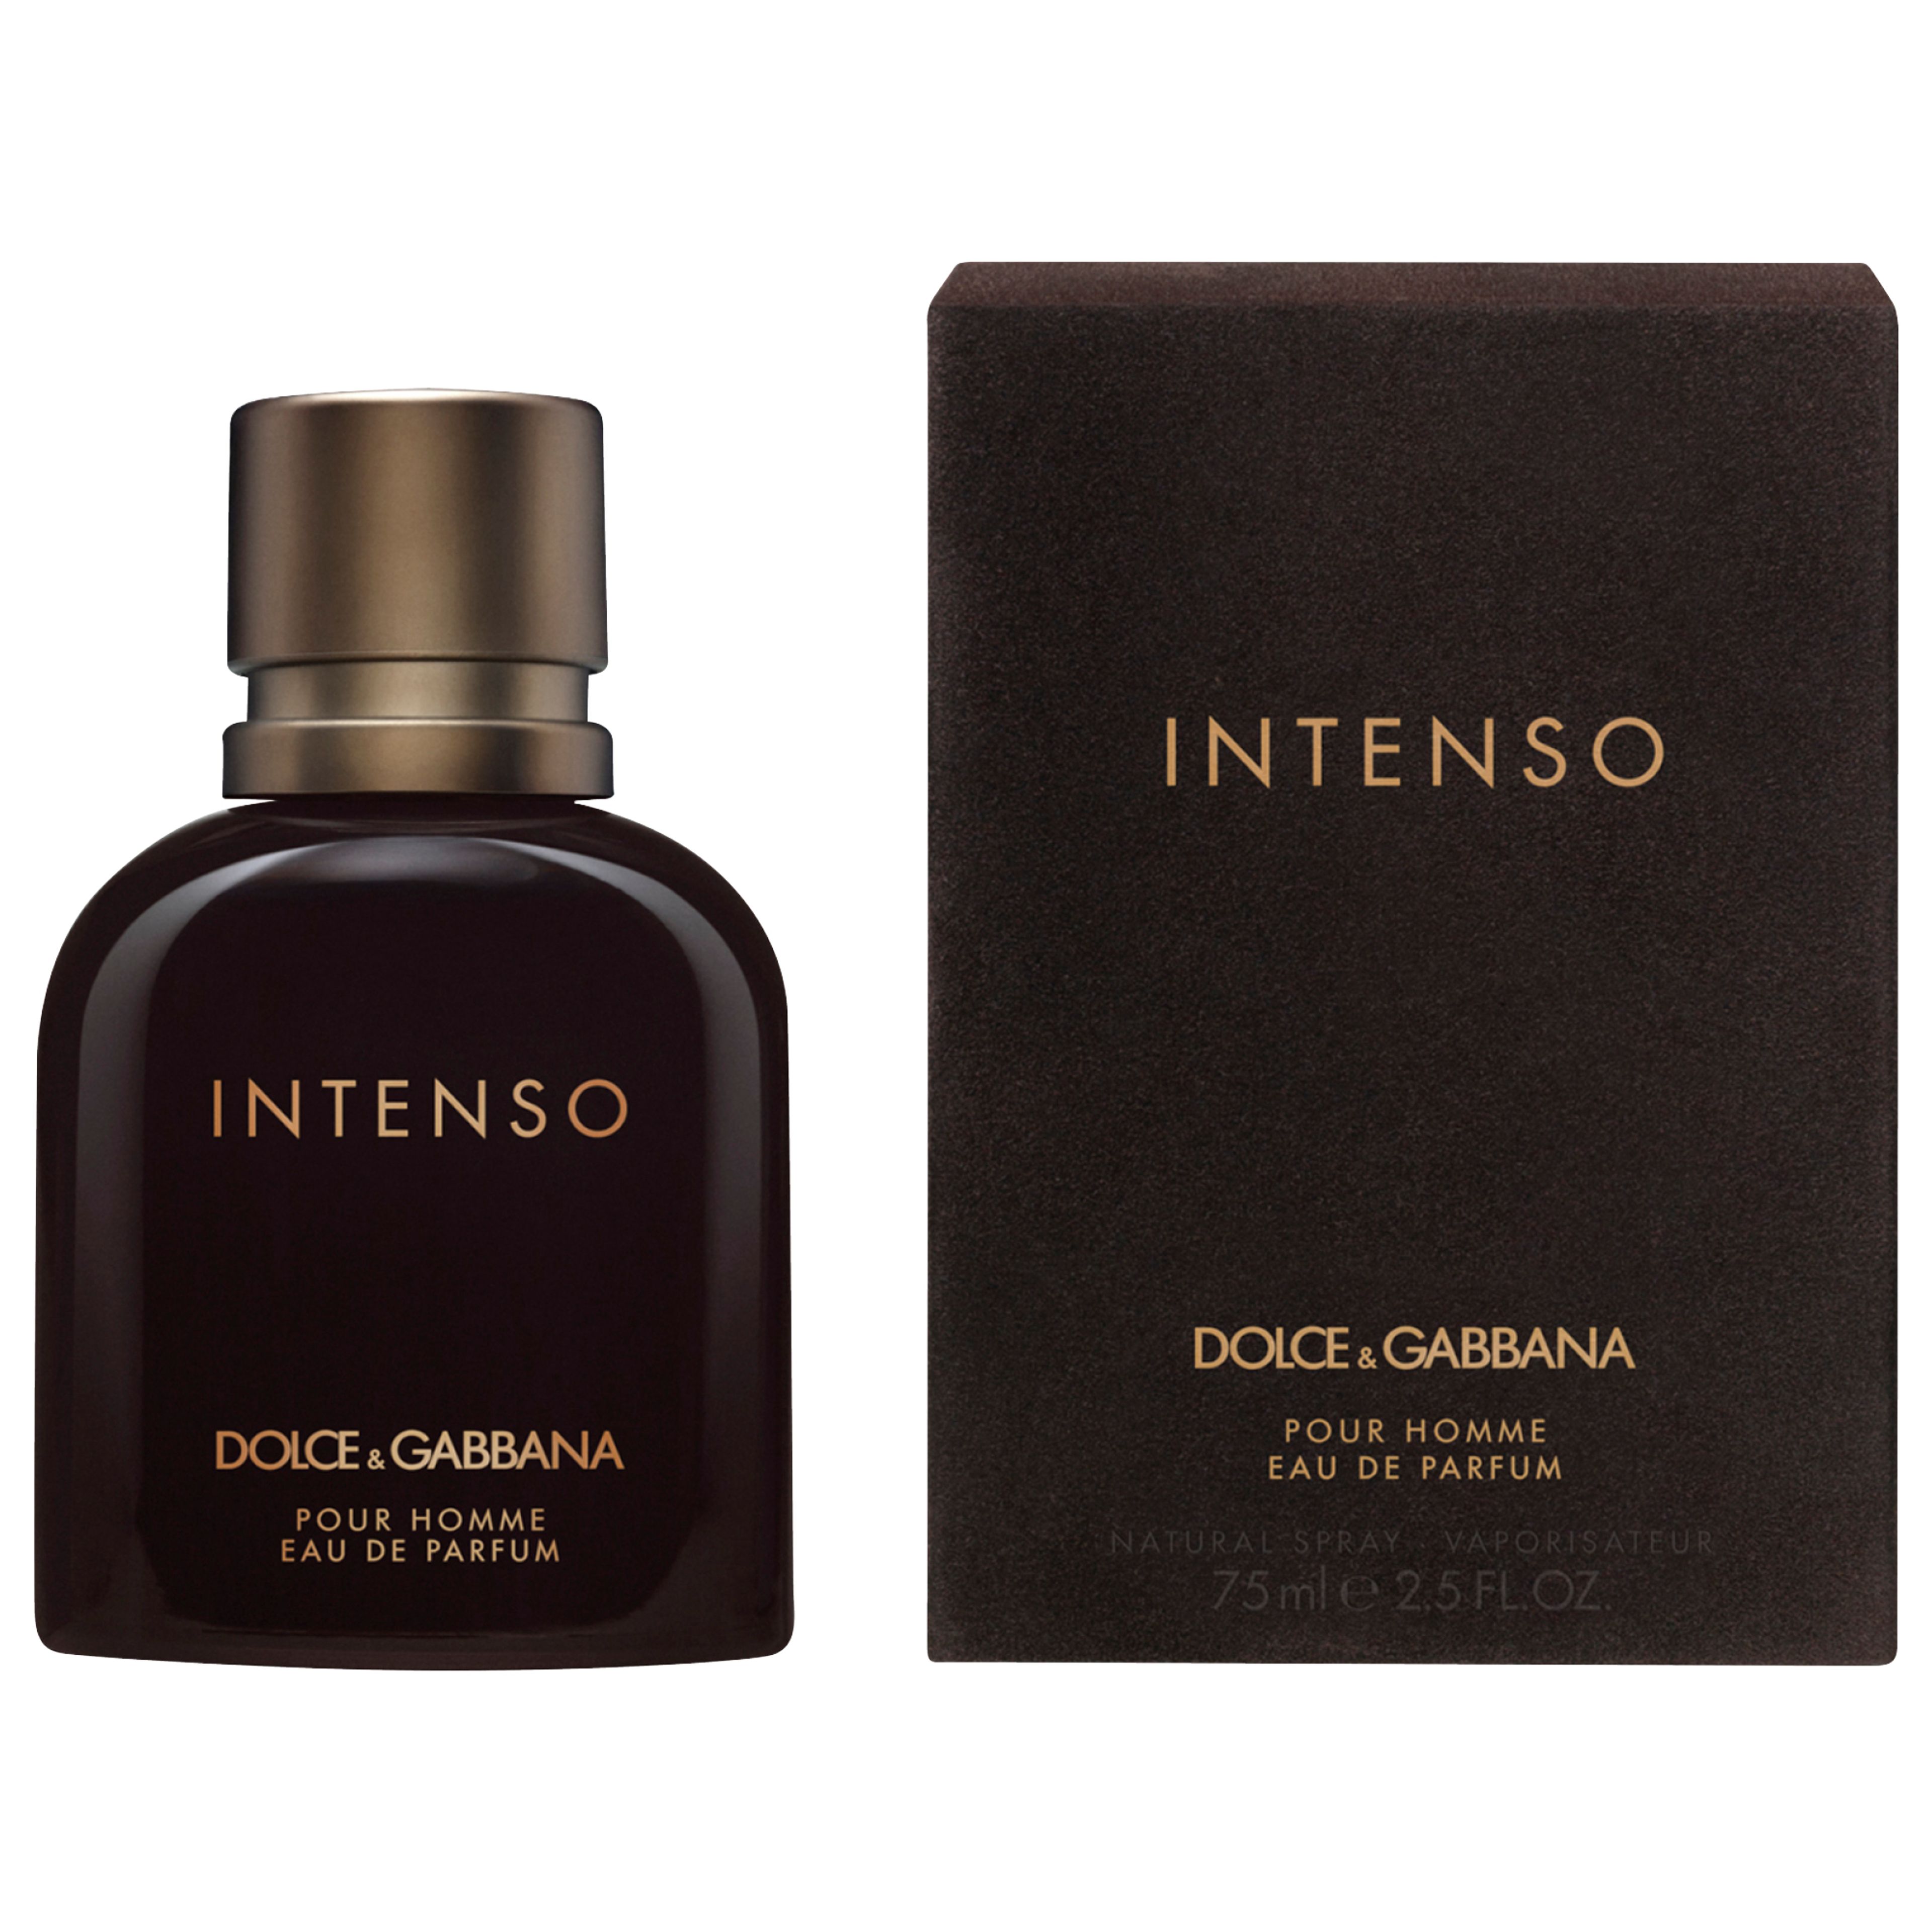 Dolce & Gabbana Intenso Eau De Parfum 2